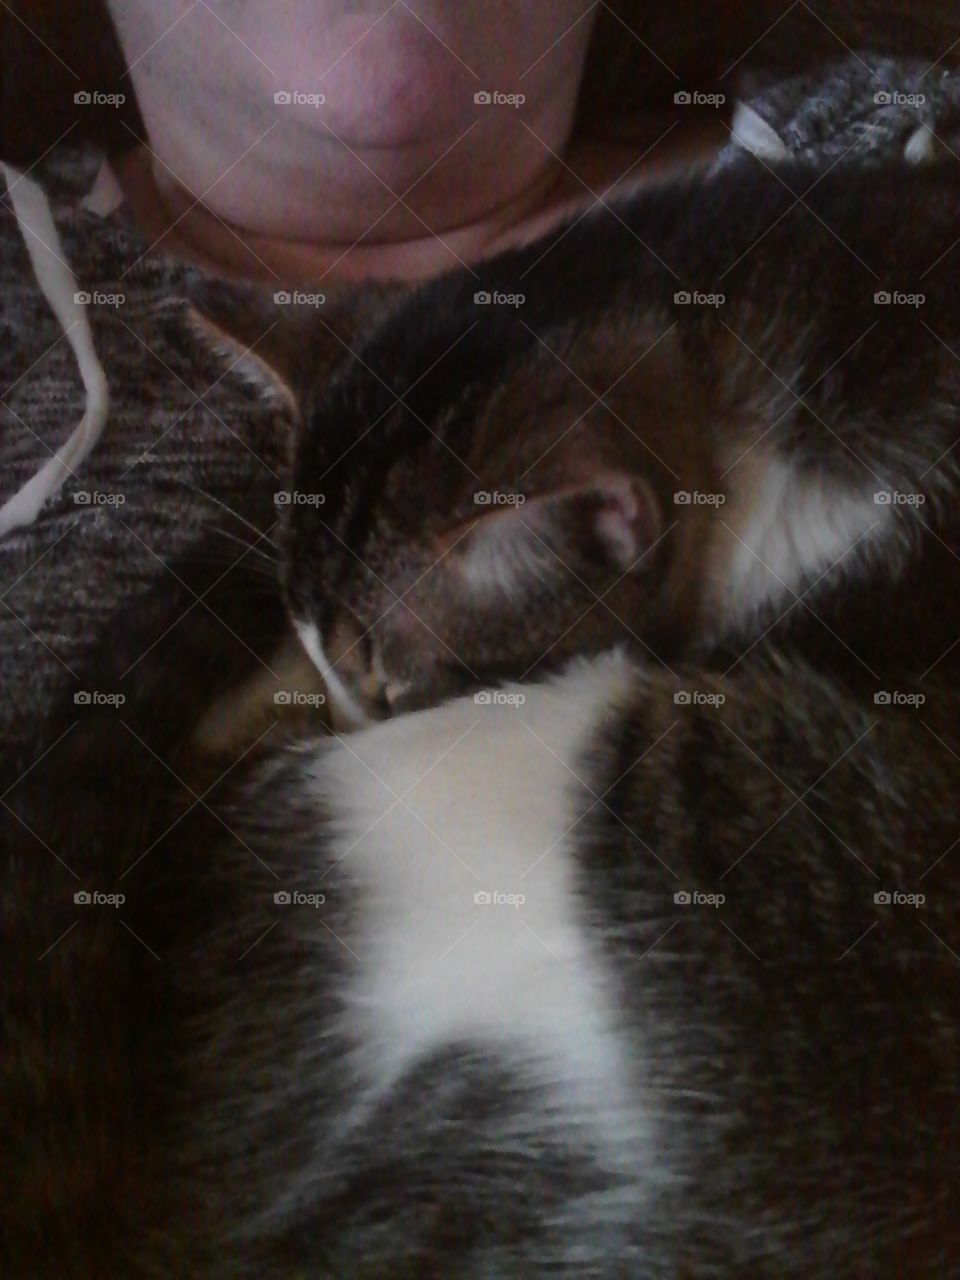 kitty napping